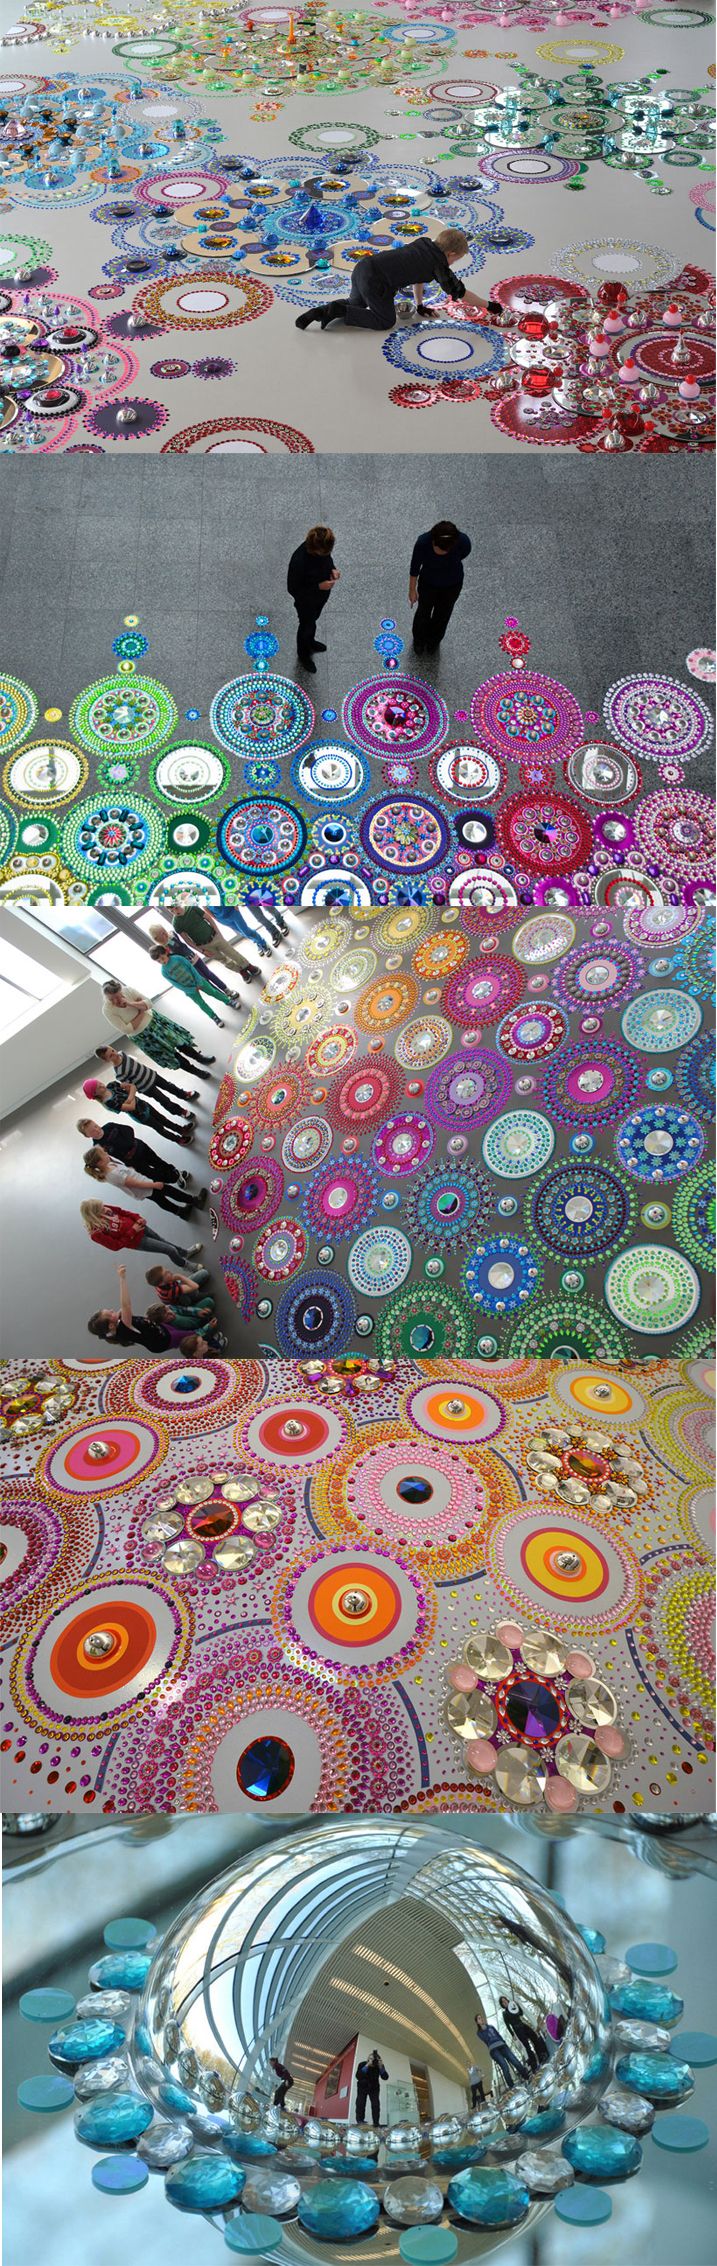 suzan drummen: kaleidoscopic crystal floor installations